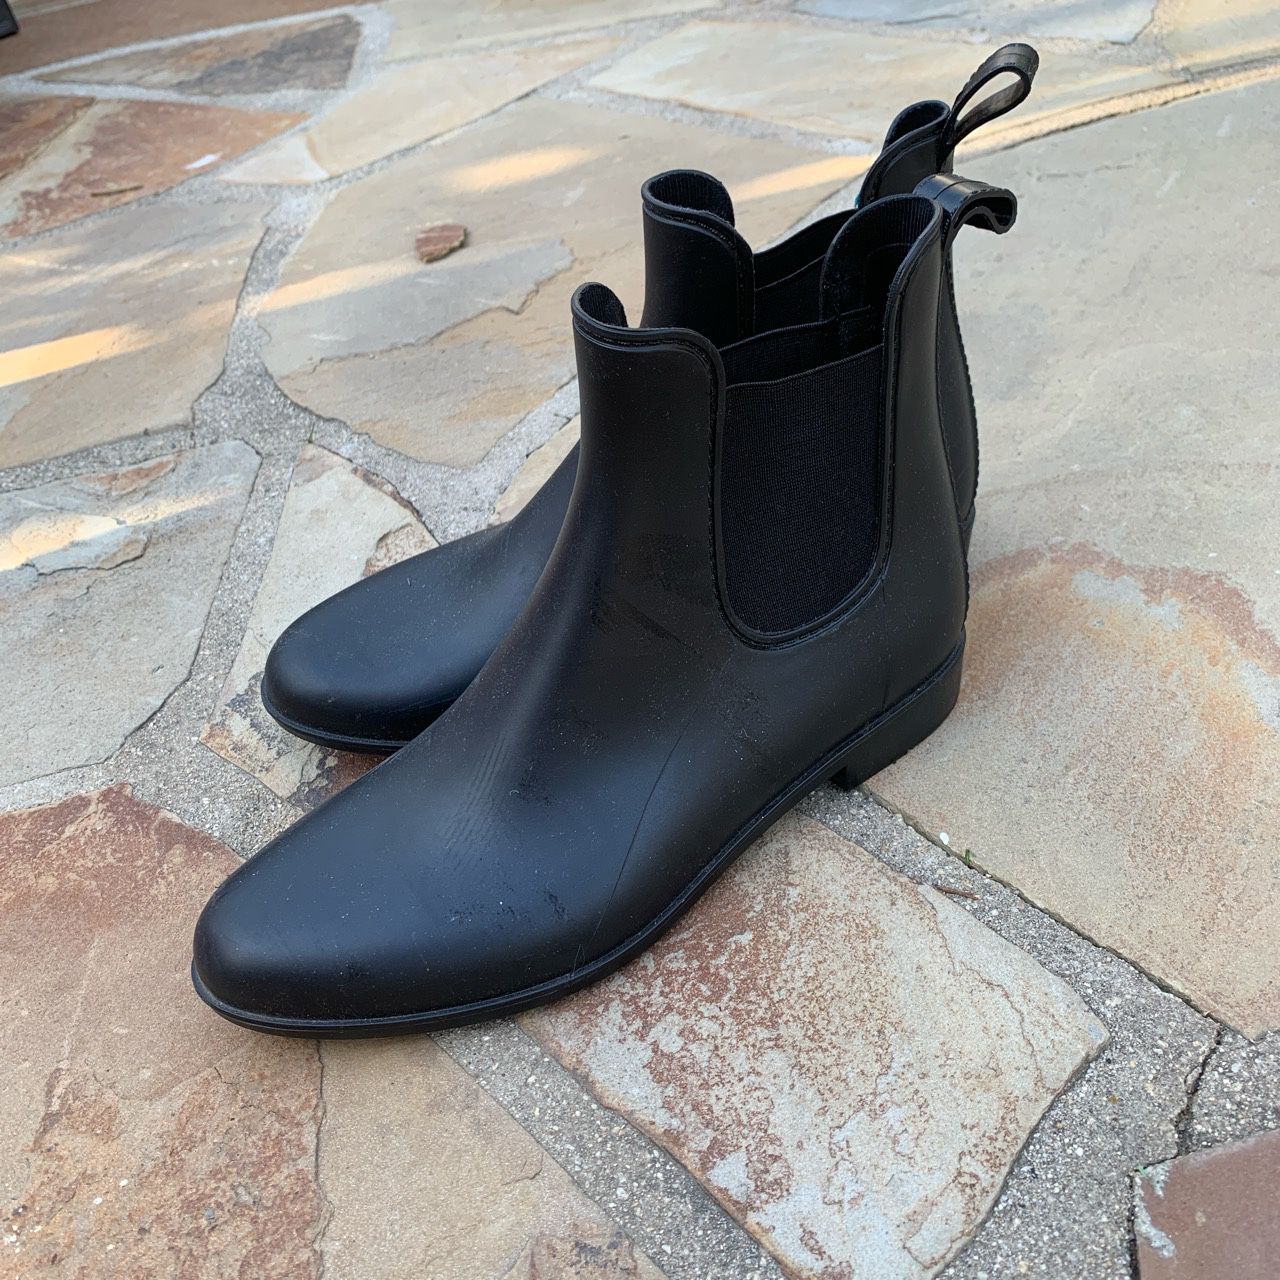 Target rain boots size 9.5 black